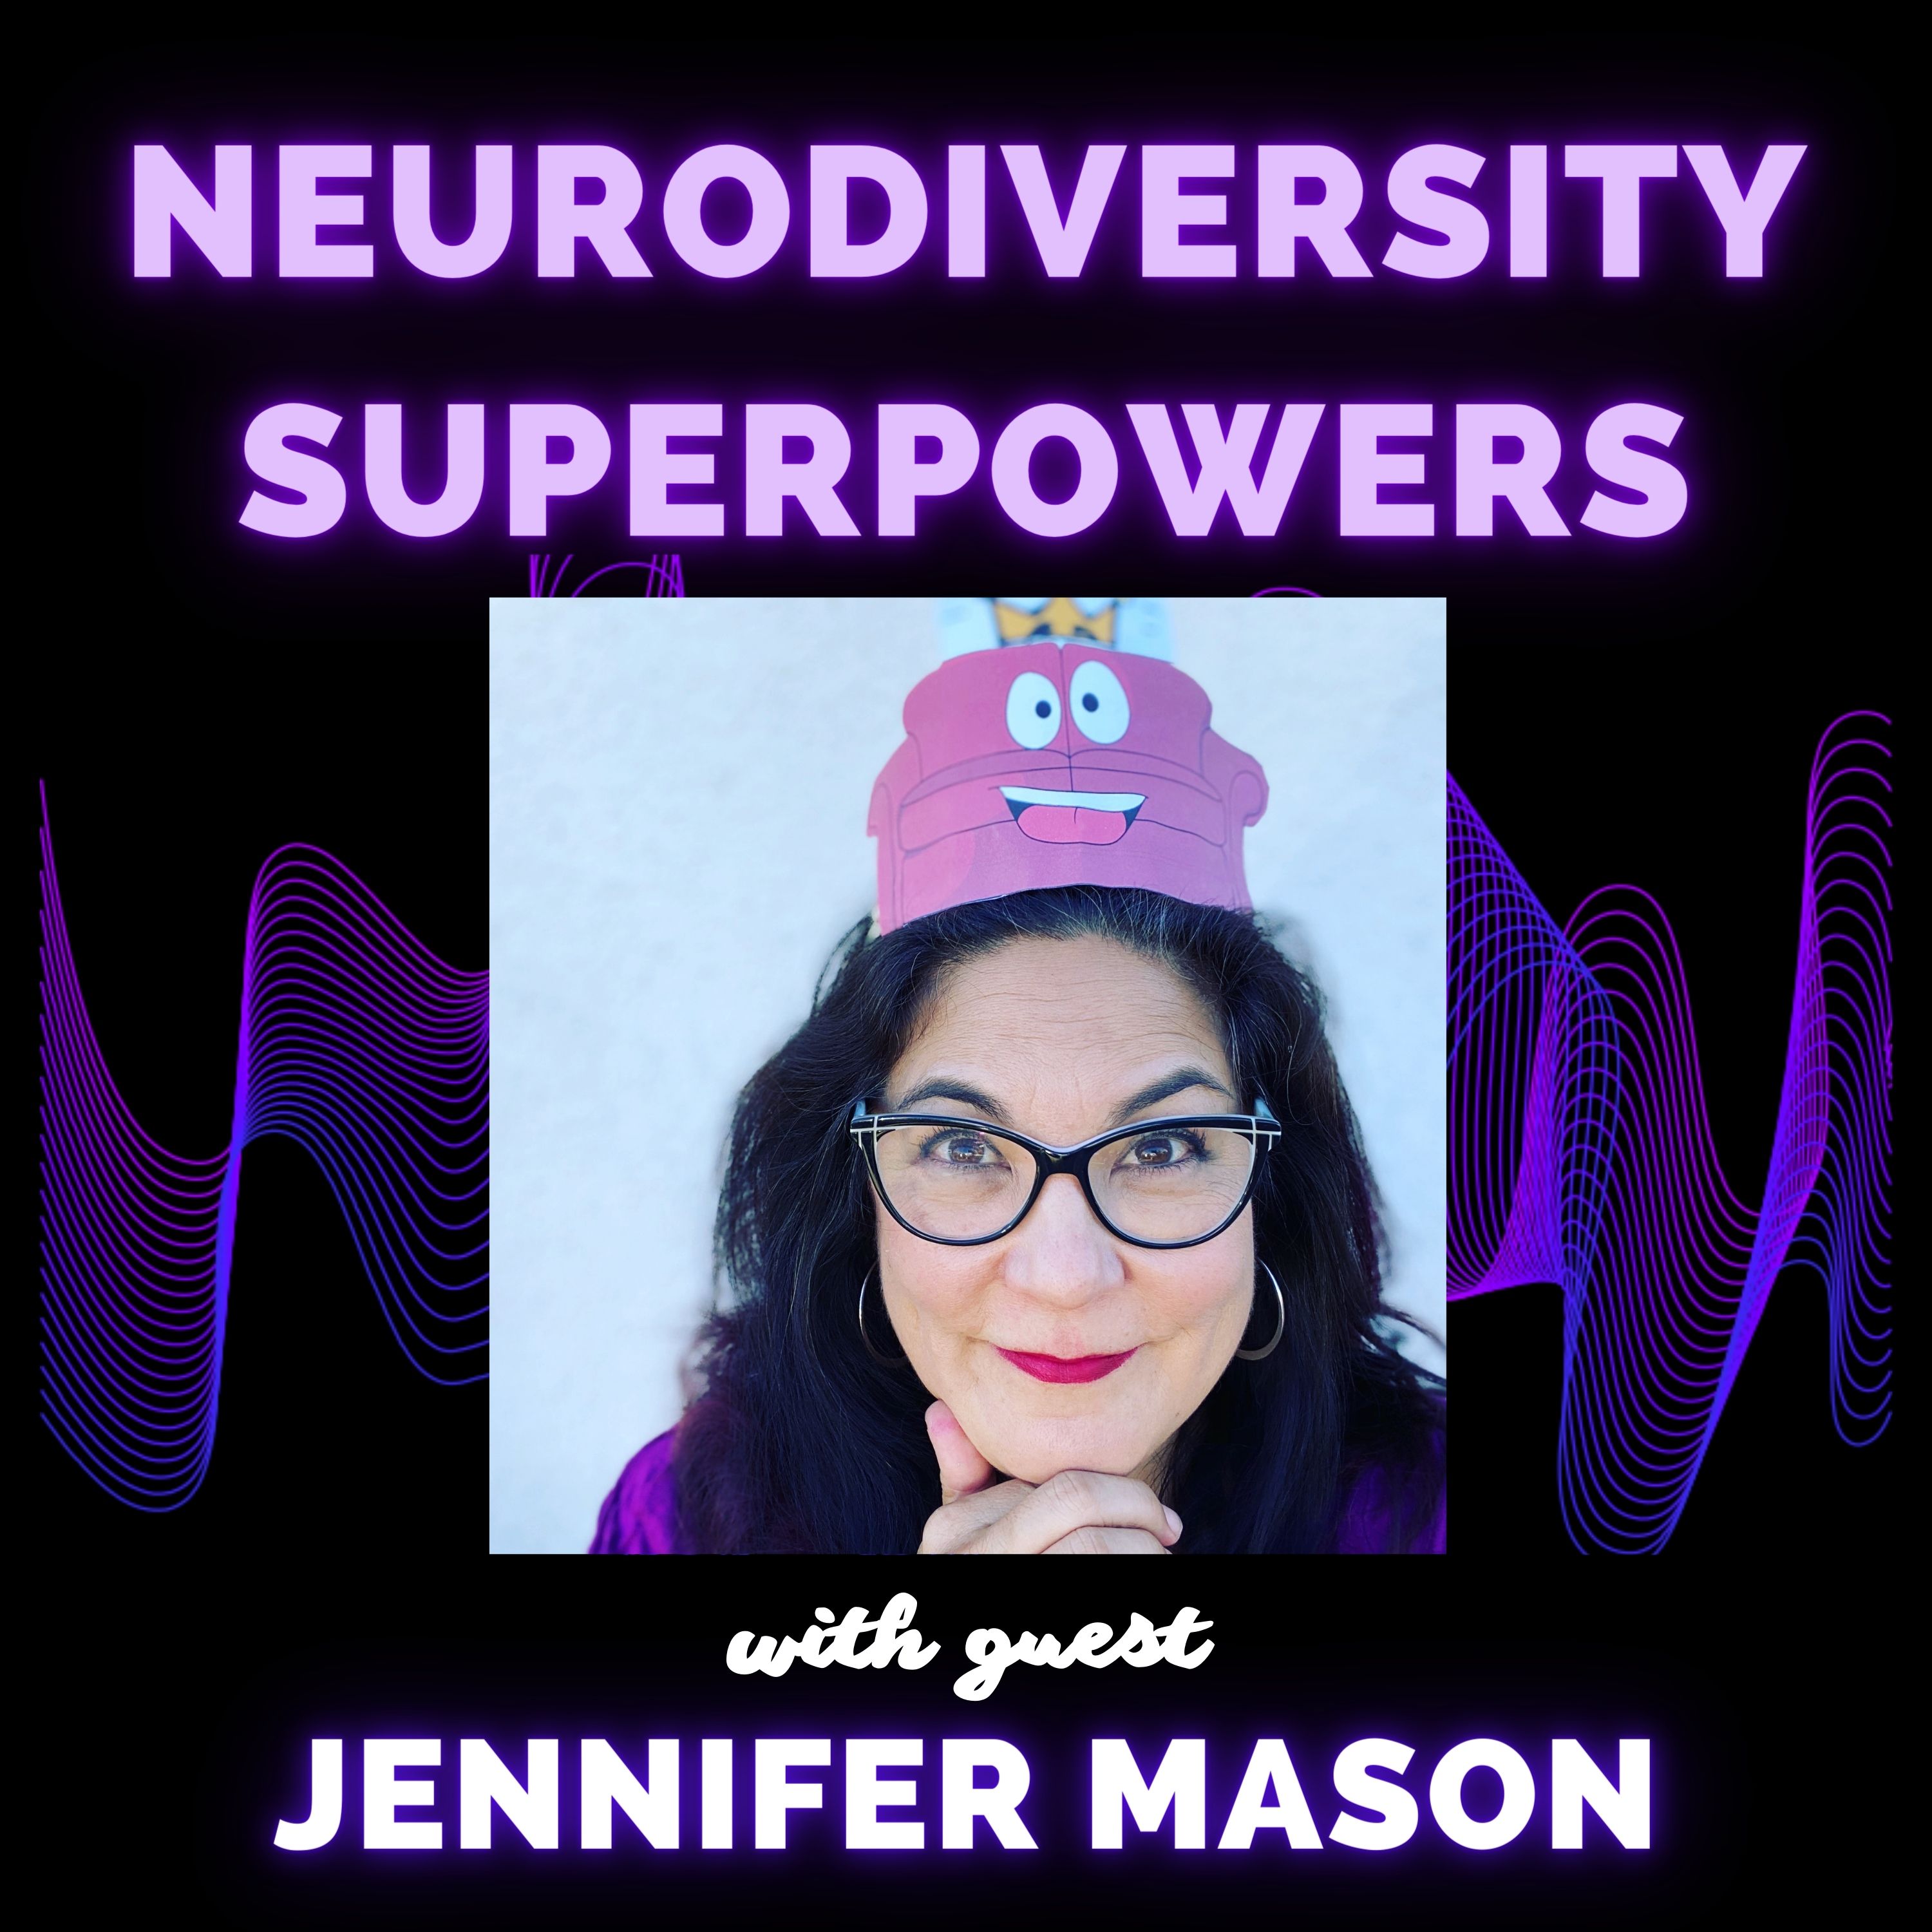 Jennifer Mason, ADHD Super Comedian and Acupuncturist